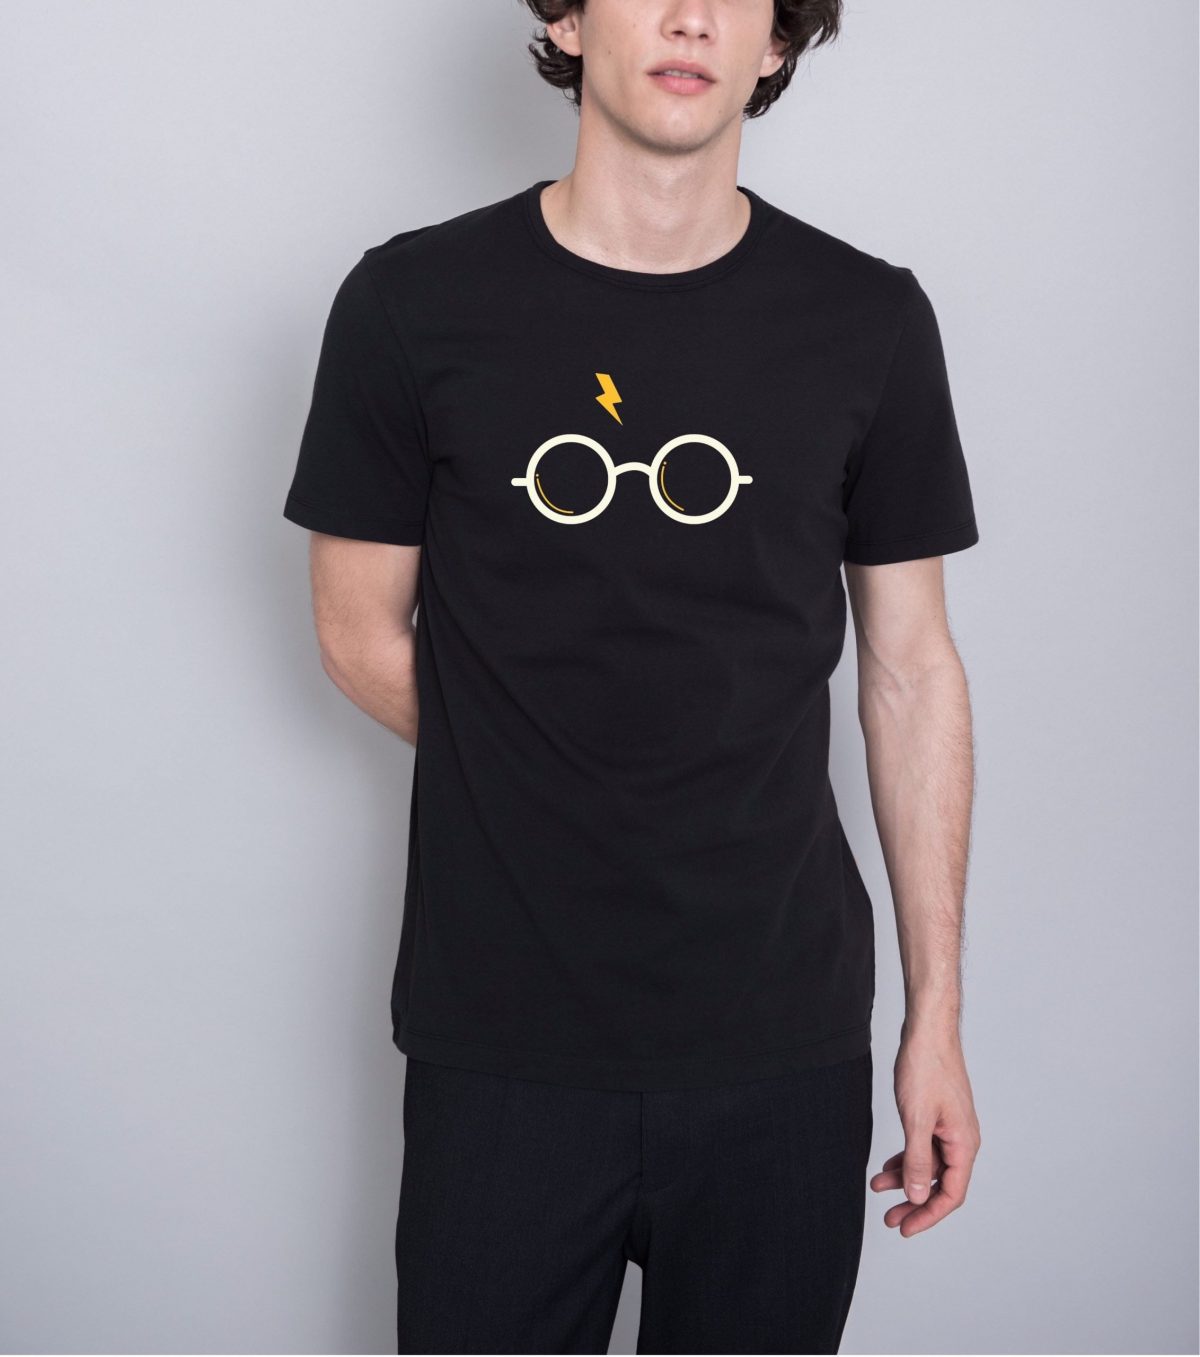 Harry potter specs